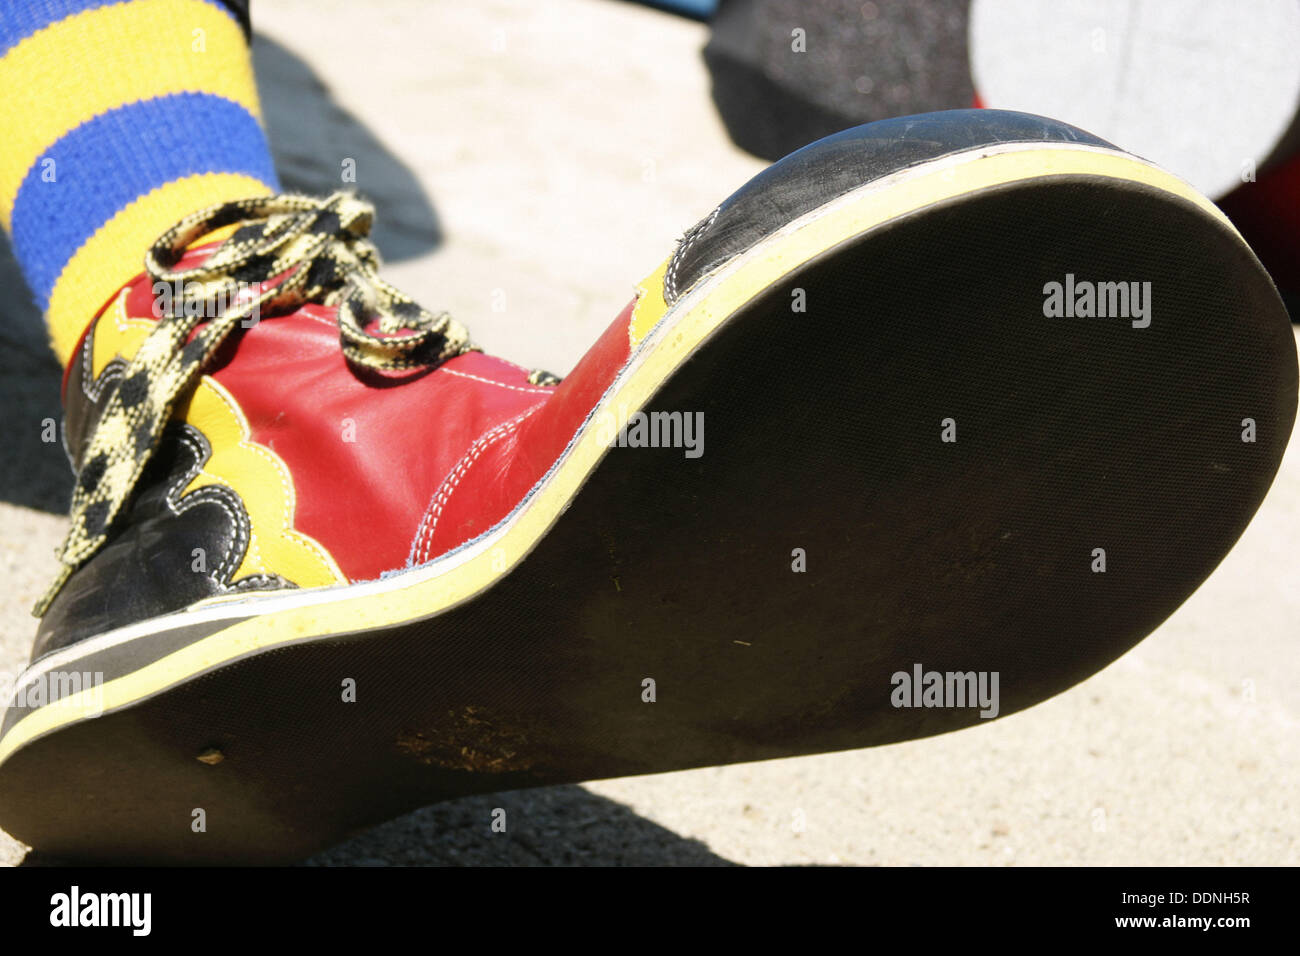 Clown shoe with black bottom Stock Photo - Alamy